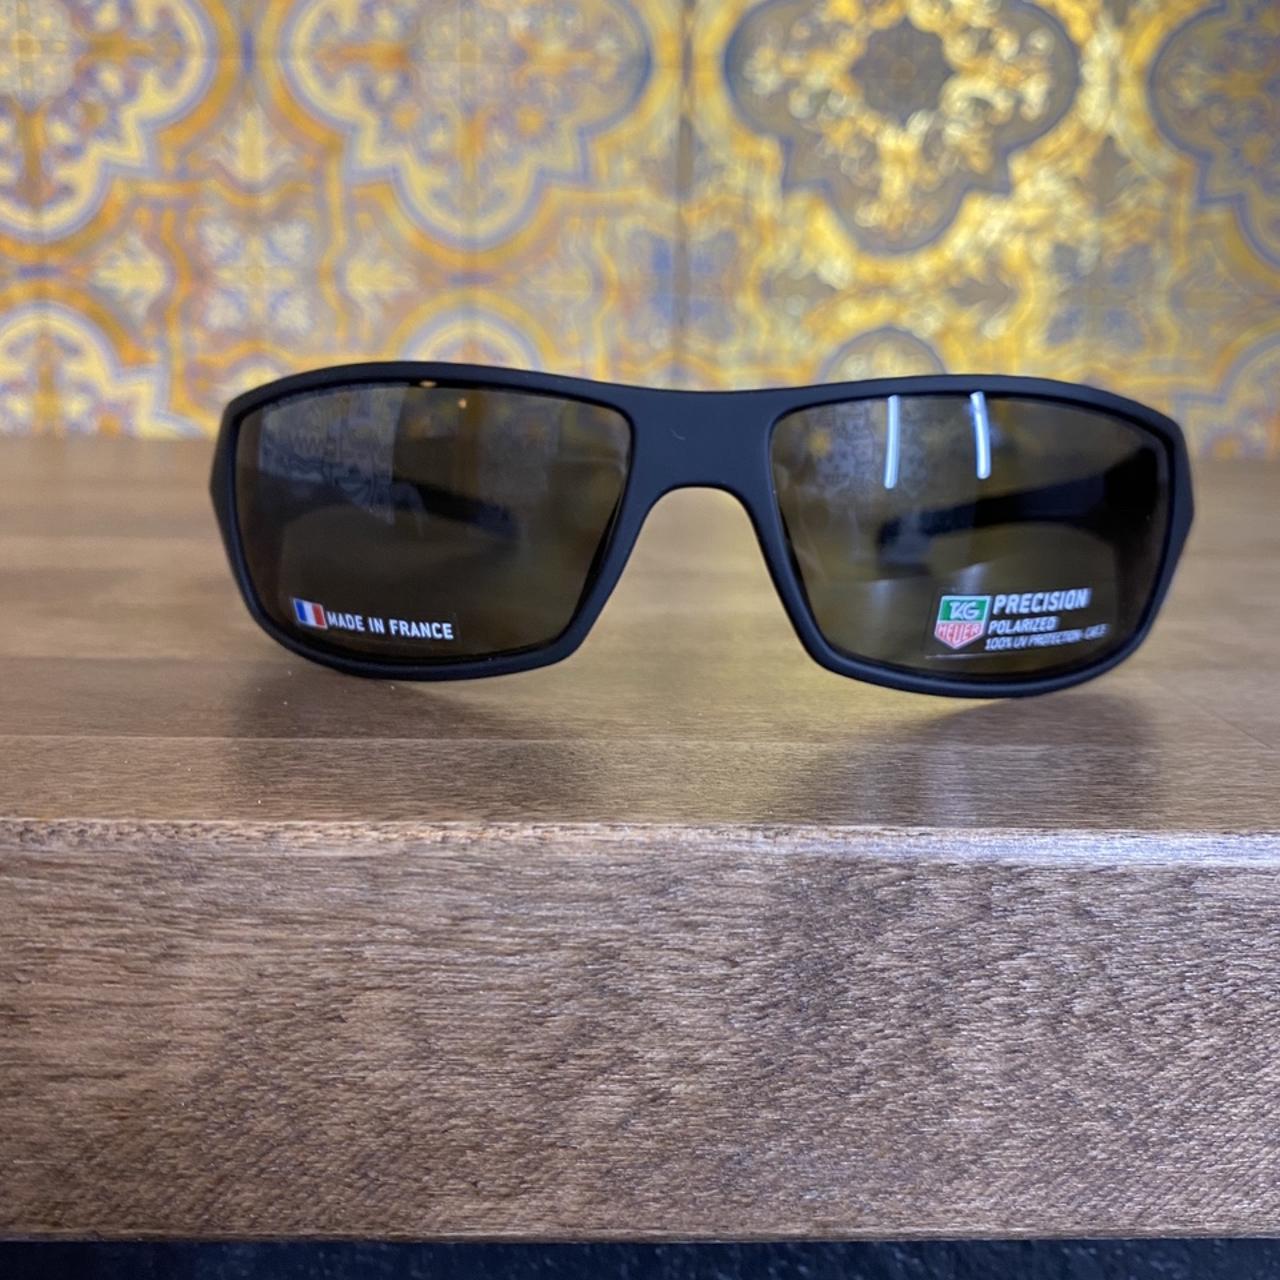 Product Image 2 - Tag heuer racing sunglasses. Brand